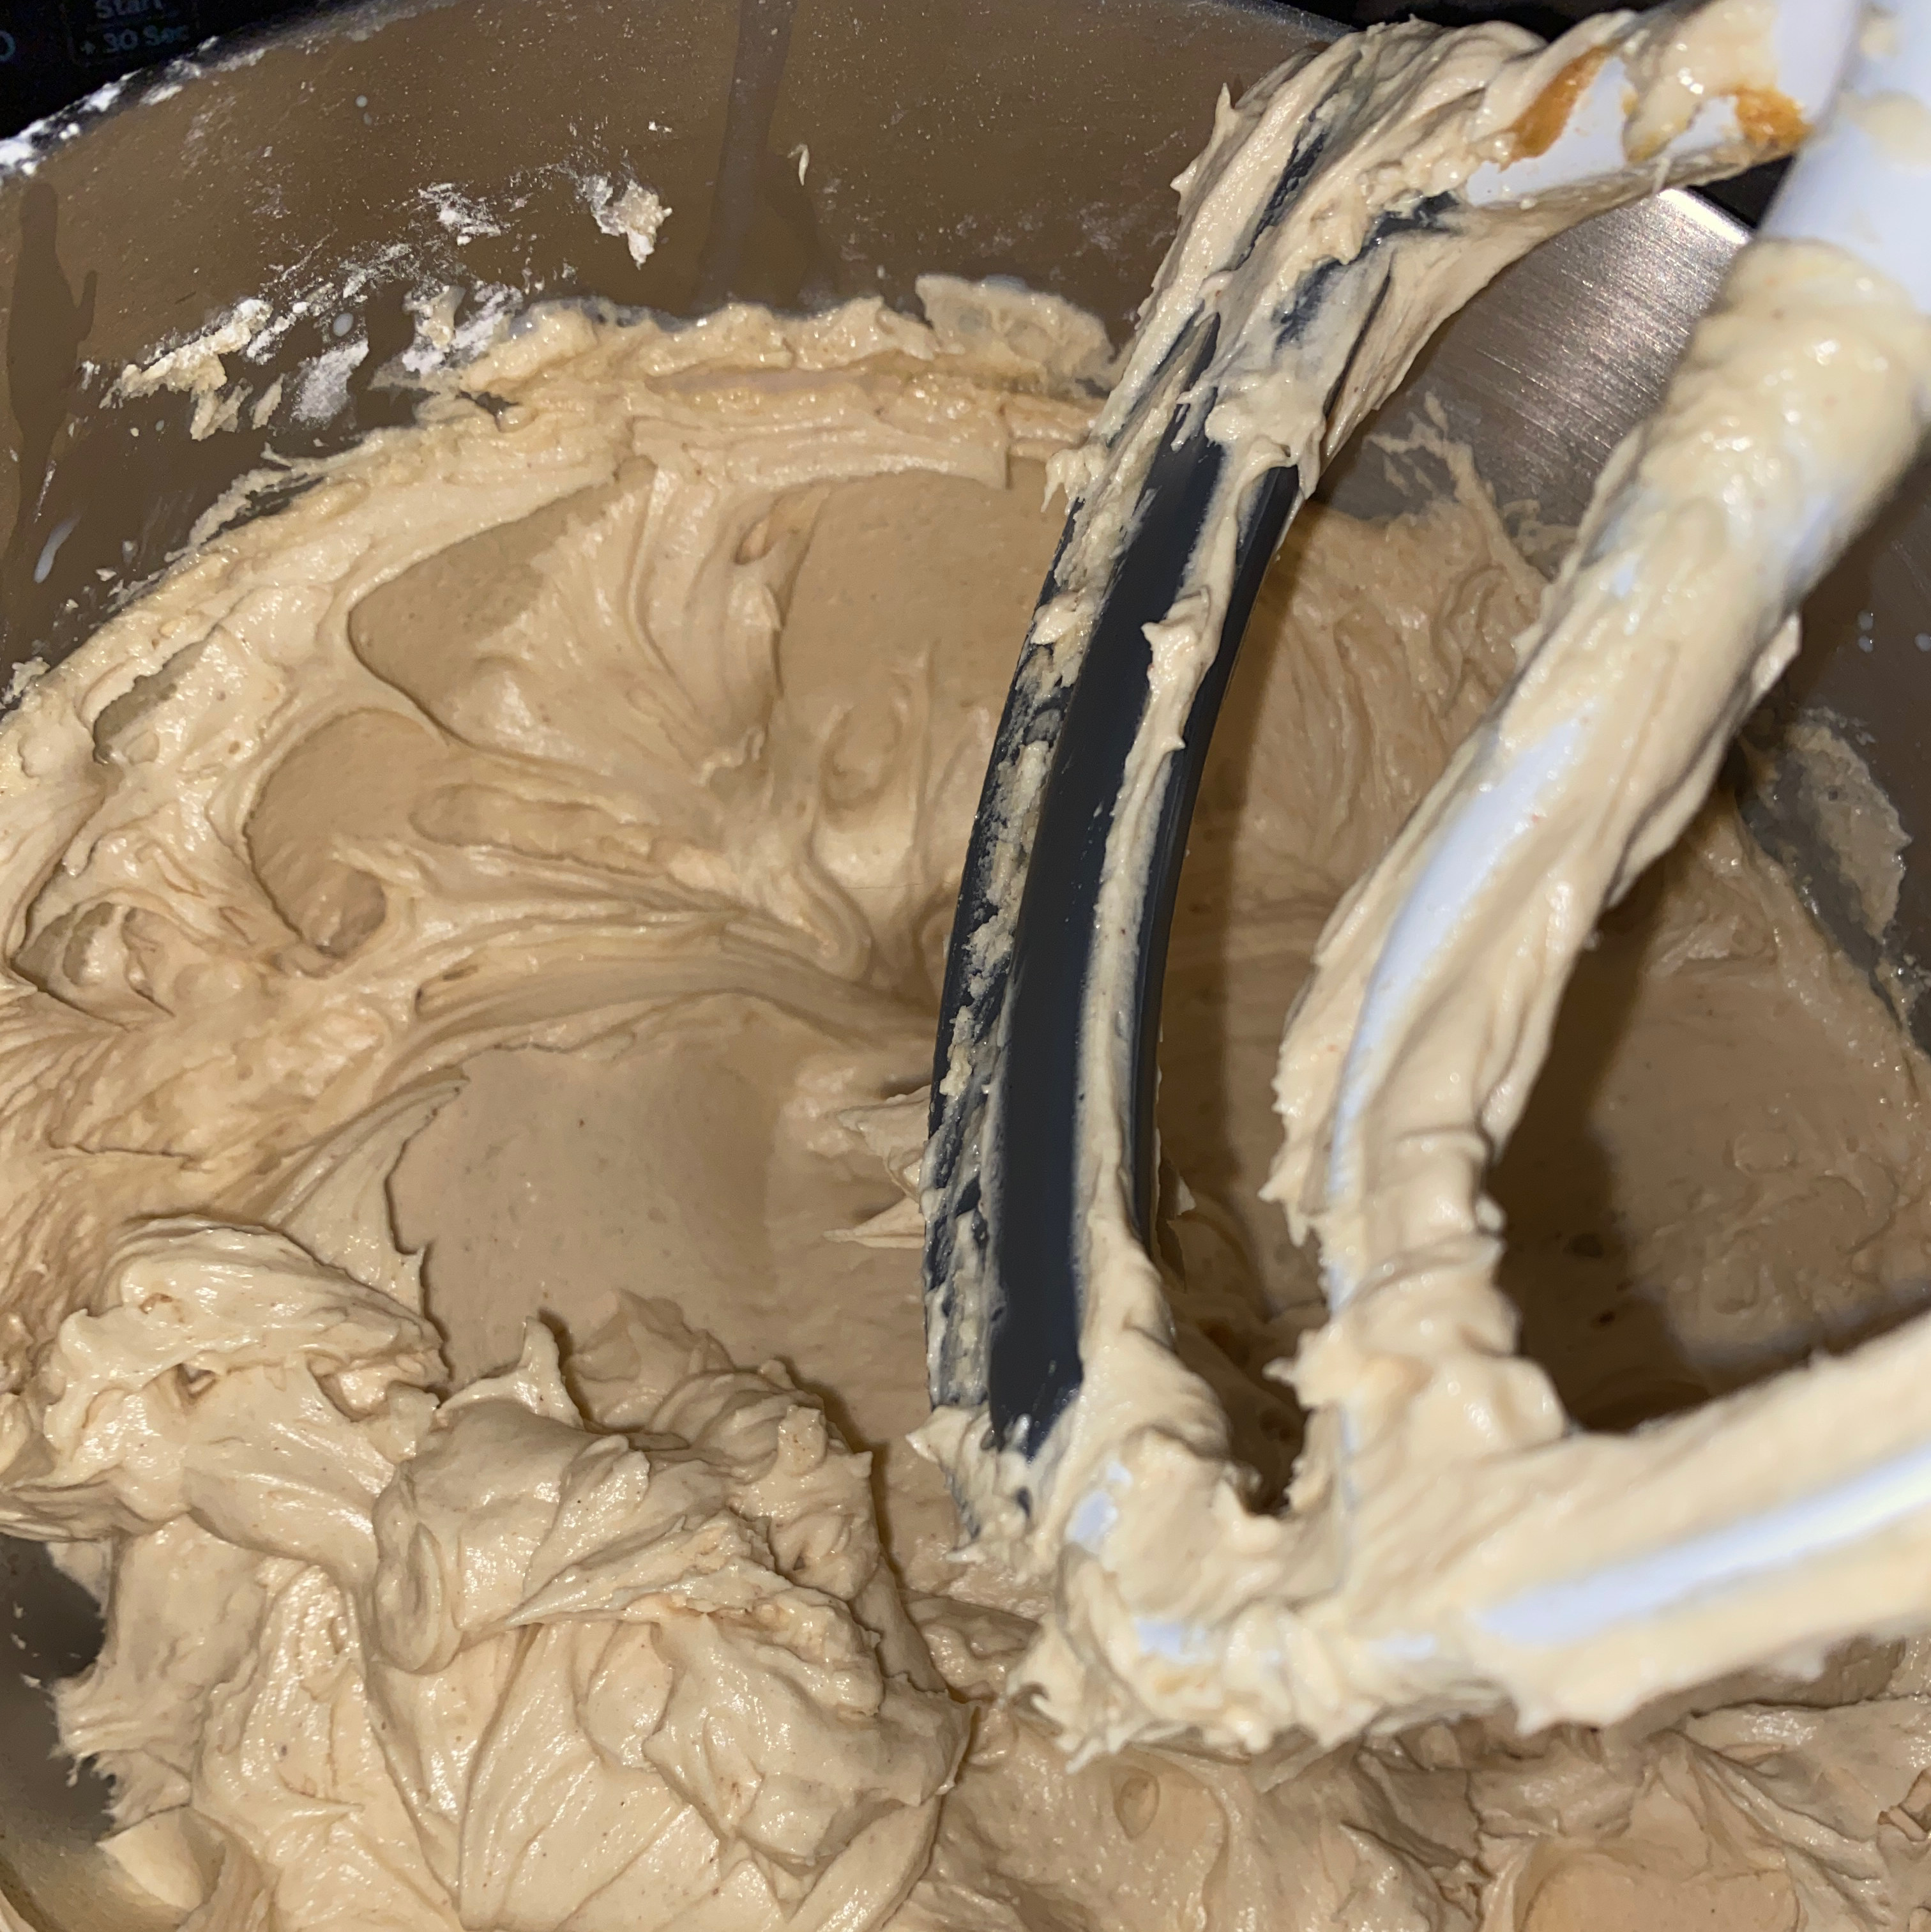 Creamy Peanut Butter Icing 